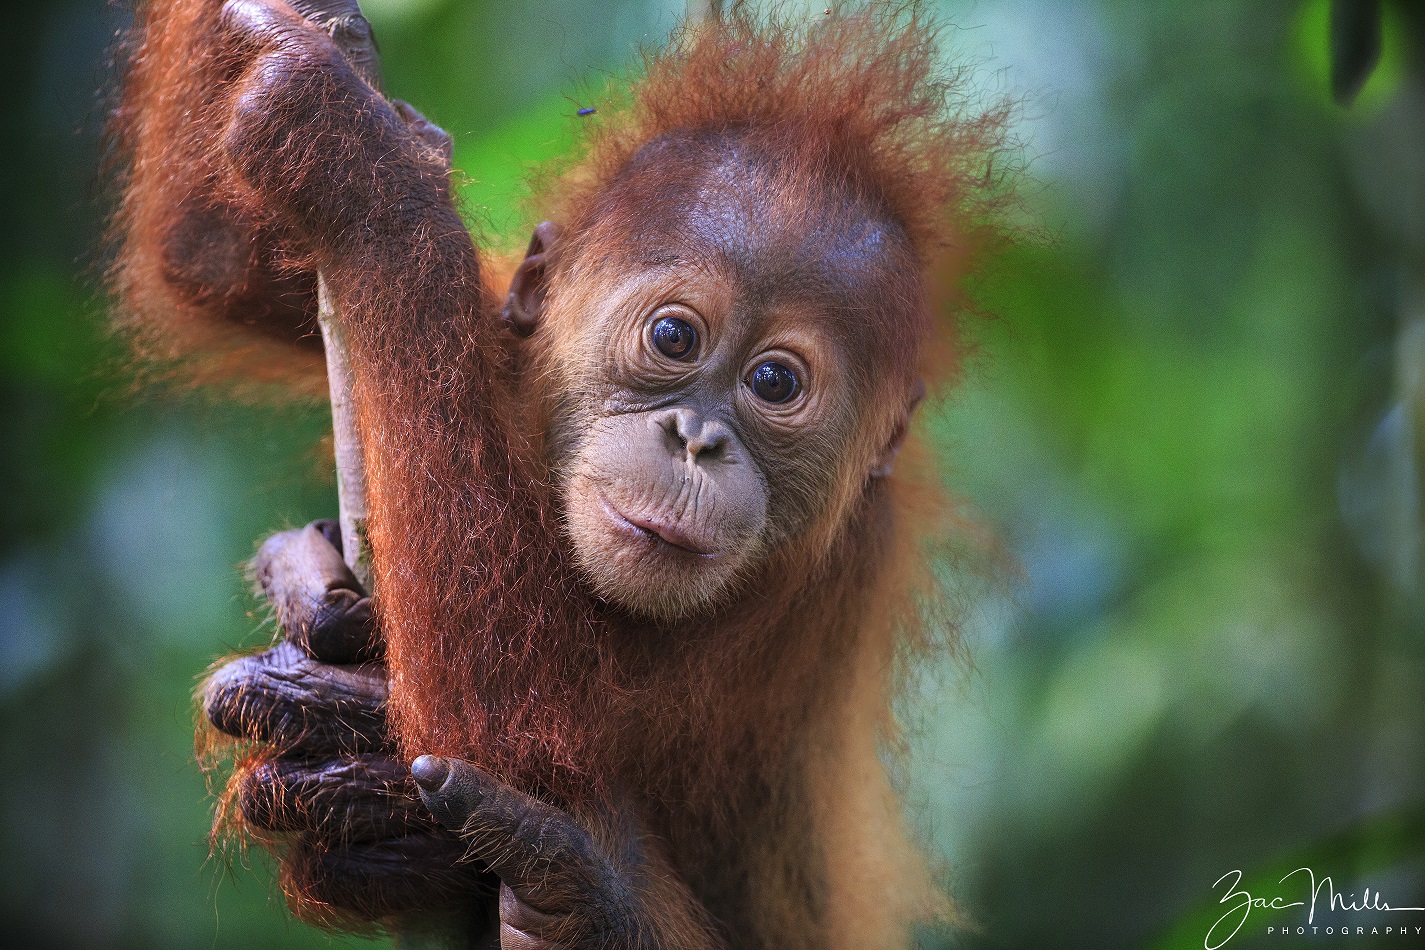 A baby sumatran orangutan